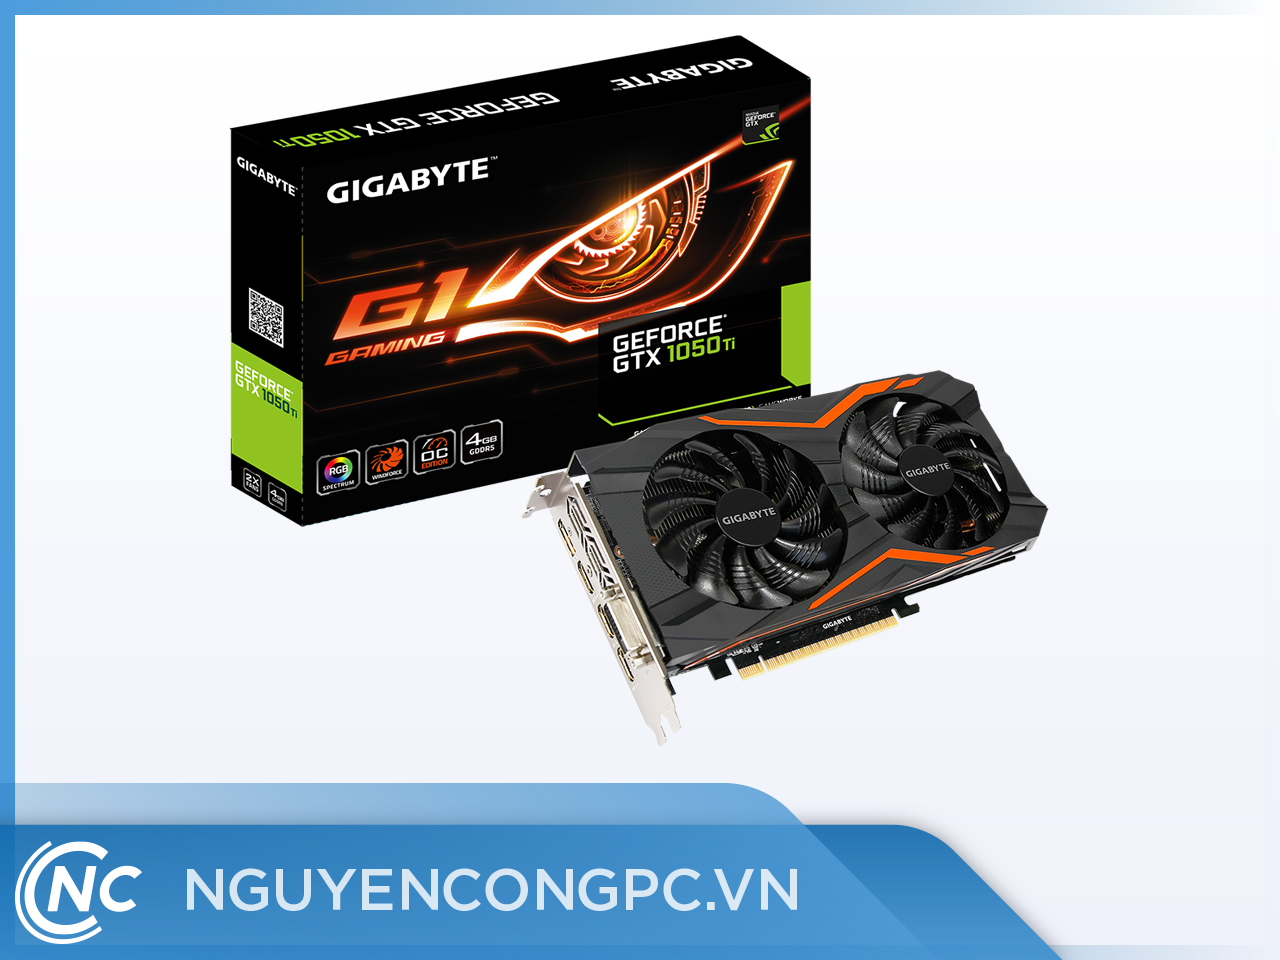 VGA GIGABYTE GeForce GTX 1050 Ti G1 